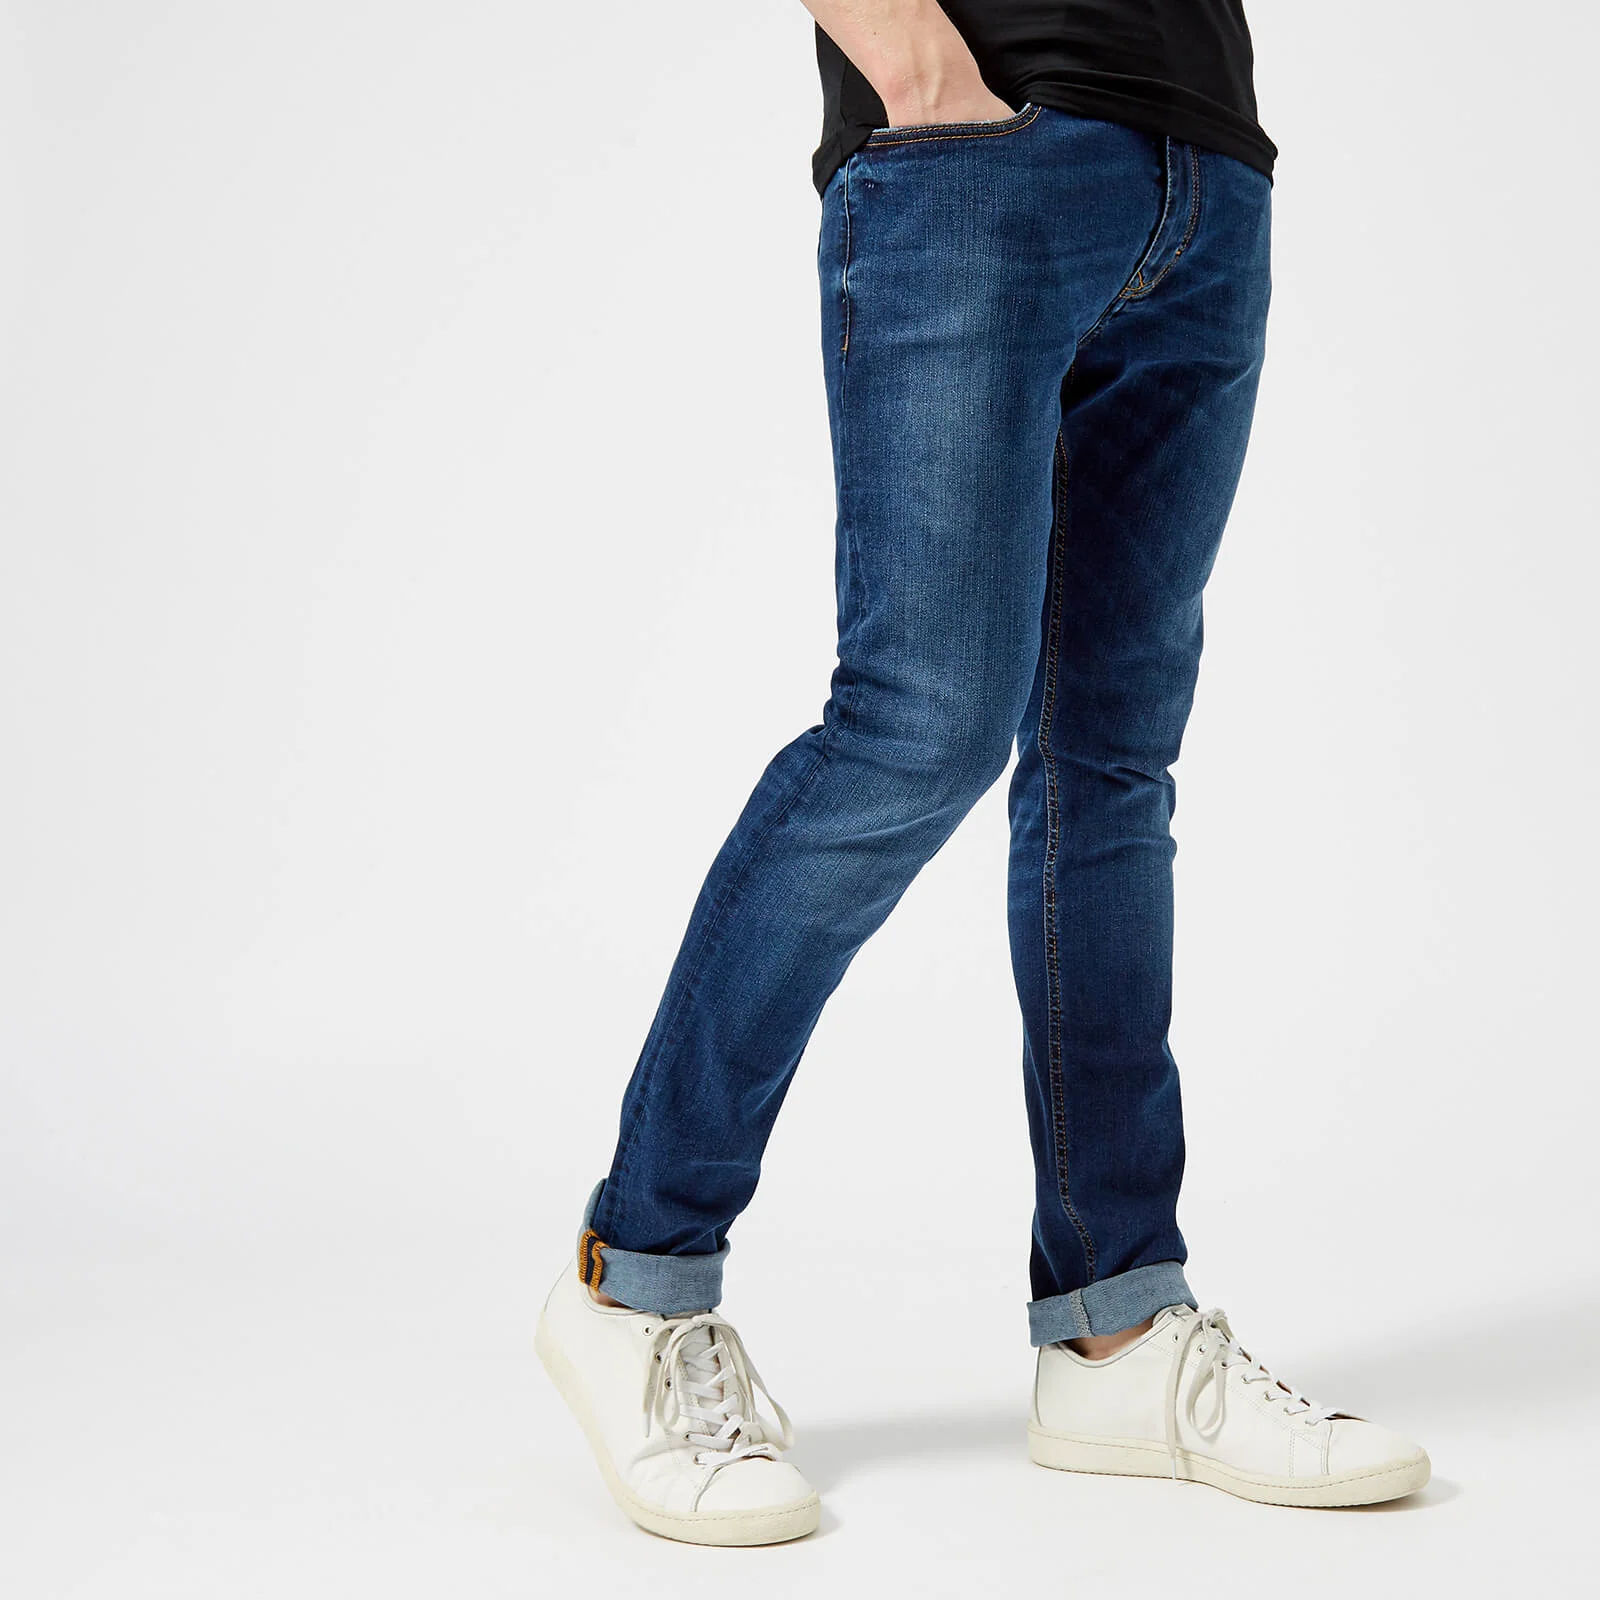 Vivienne Westwood Anglomania Men's Skinny Denim Jeans - Blue Denim Image 1